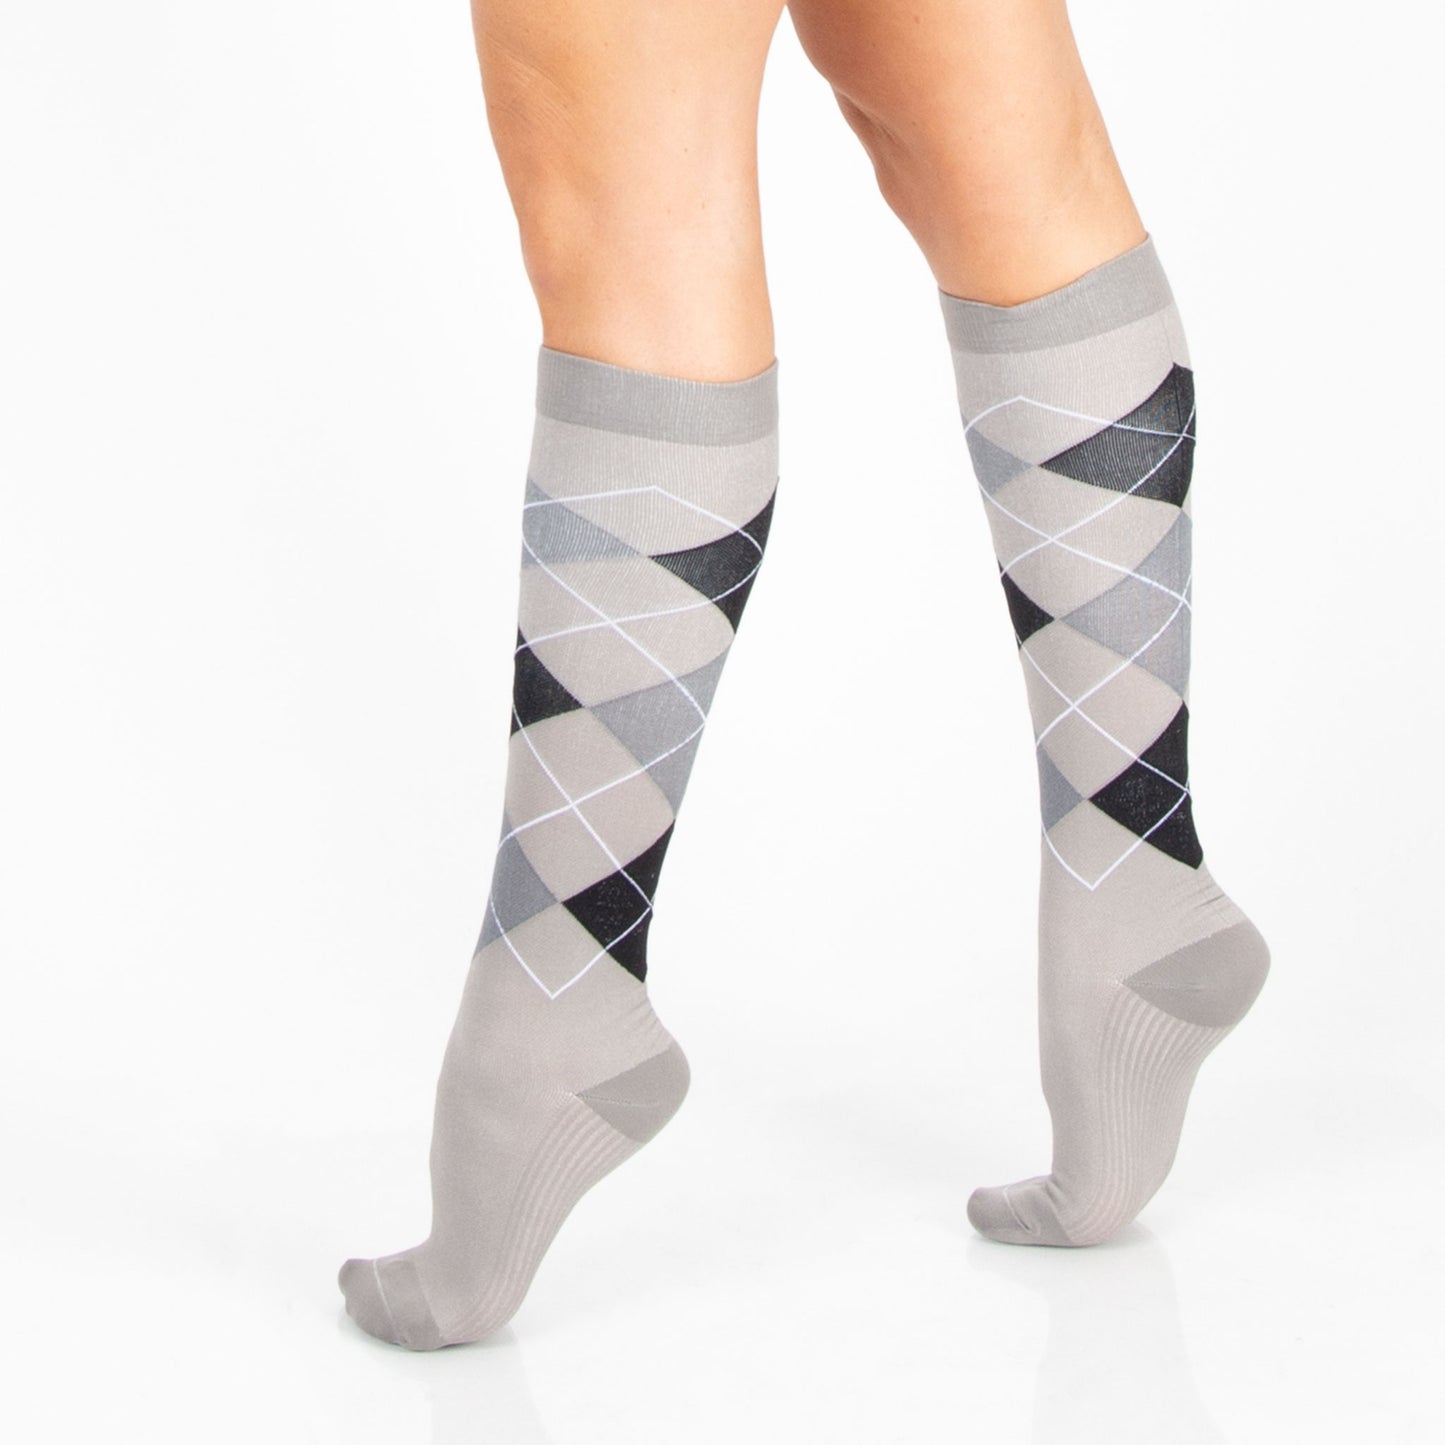 Gray Argyle Knee High 15-20mmHg Compression Socks